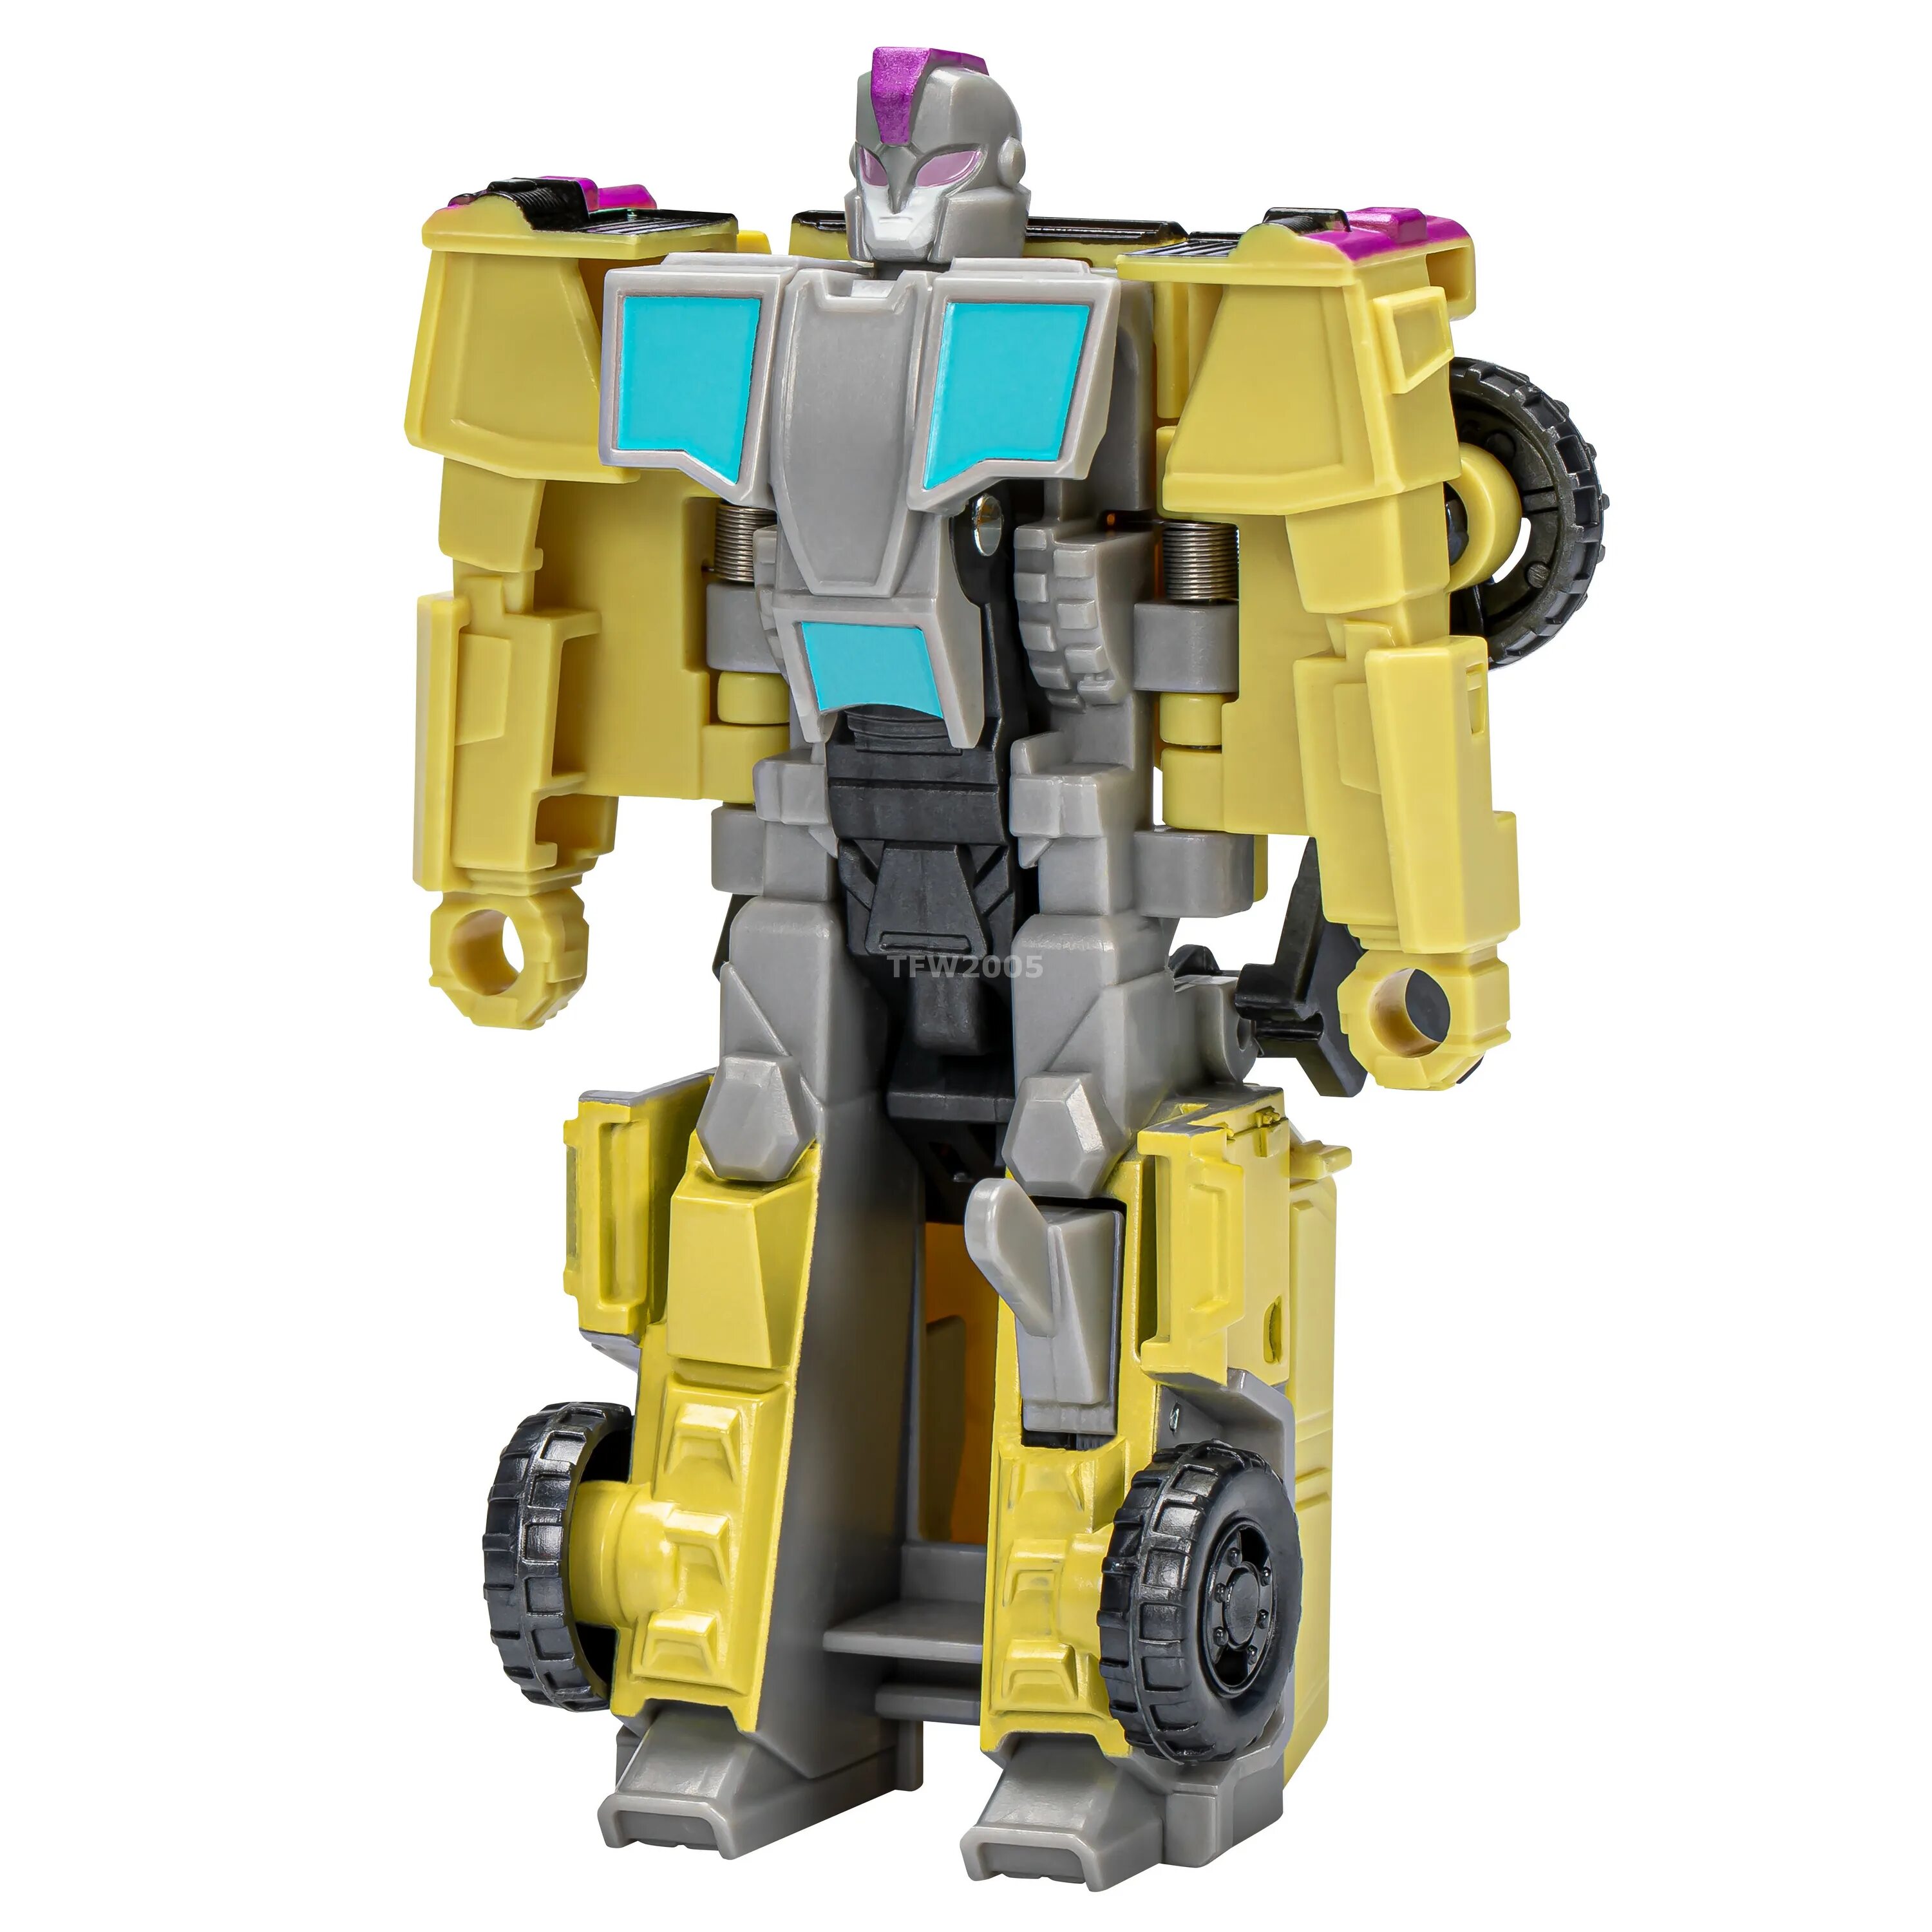 Transformers Earth Spark. Transformers Earth Spark Toys. EARTHSPARK Toy. Трансформер f3d. Transformers earthspark